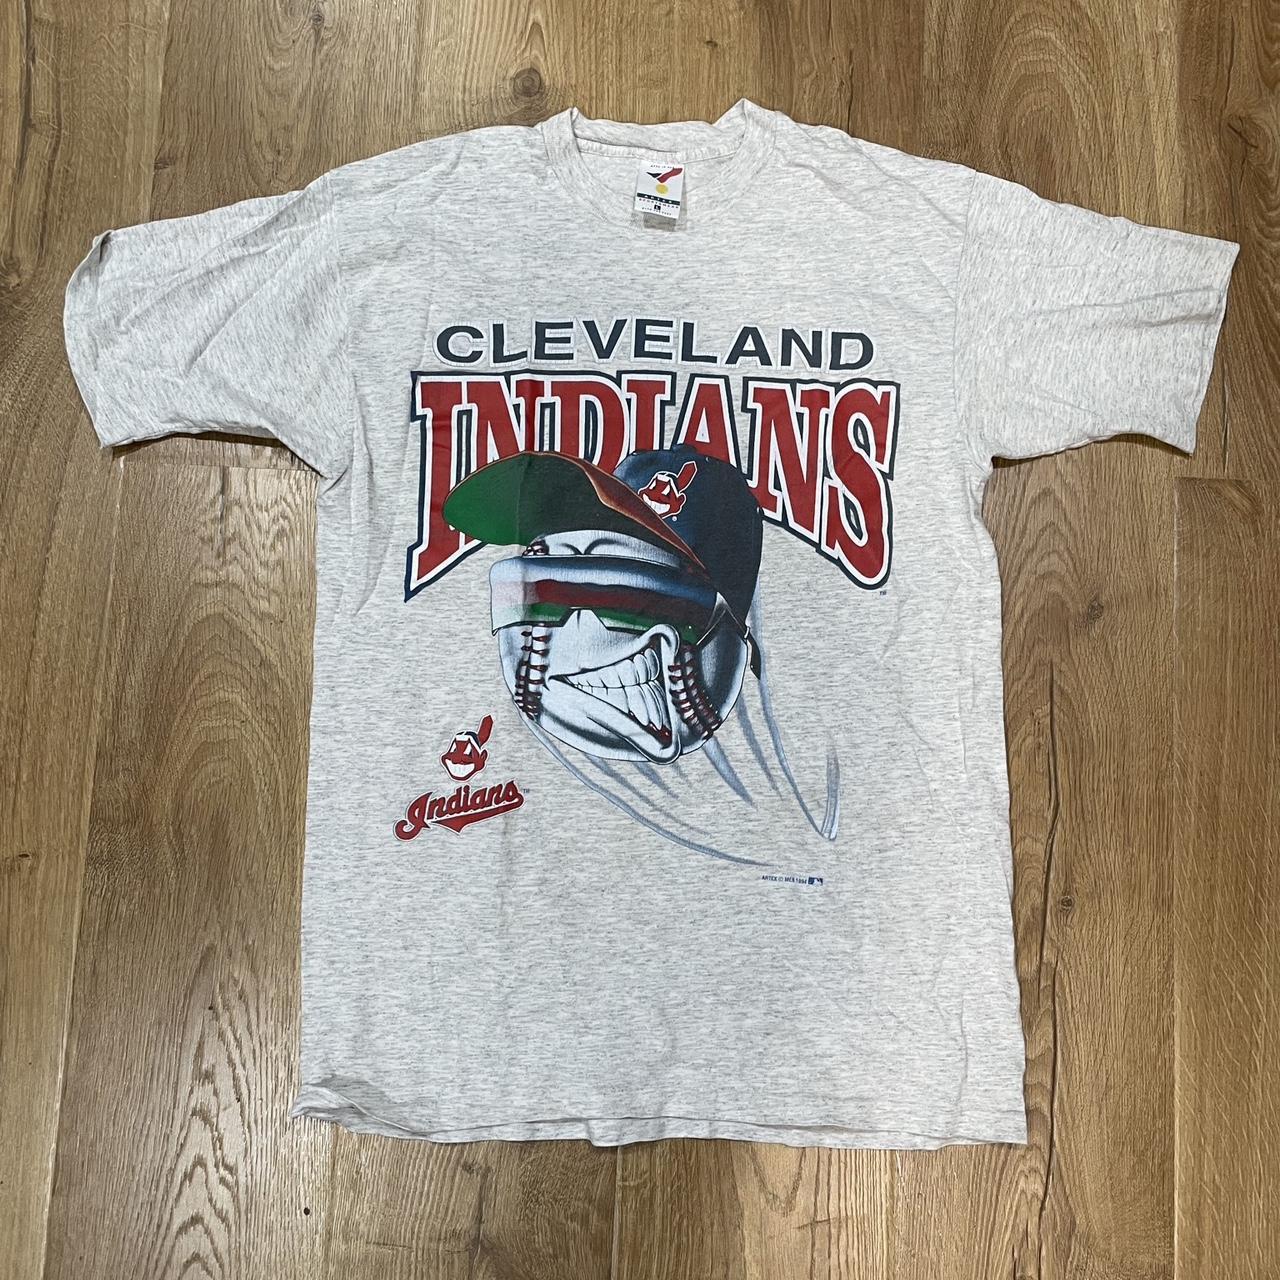 Cleveland Indians Retro Jersey